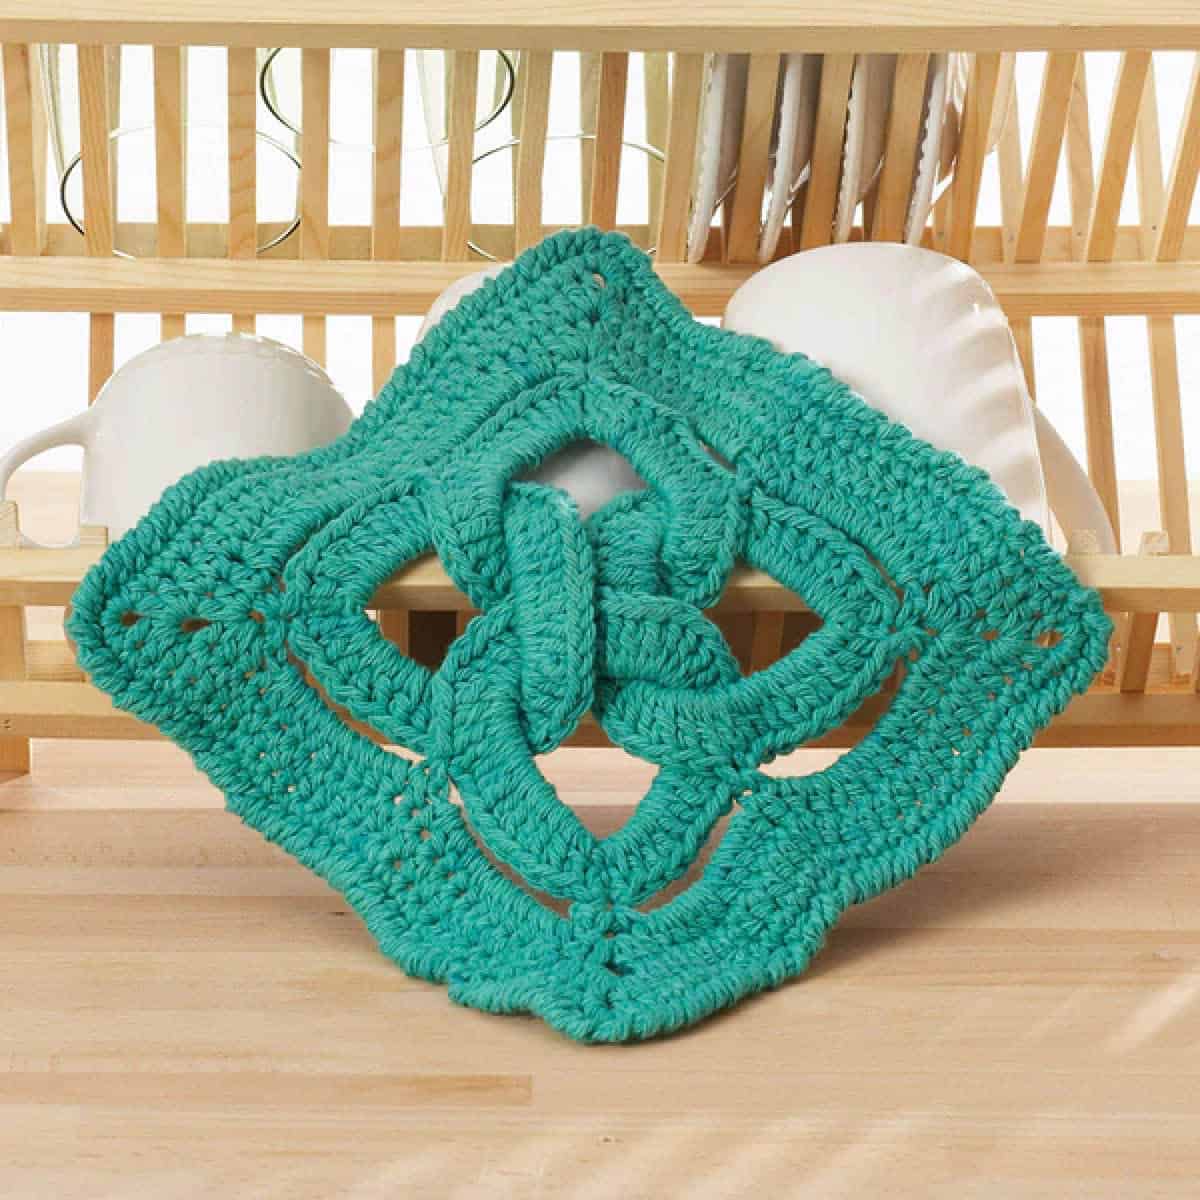 Crochet Celtic Knot Ornamental Dishcloth Pattern